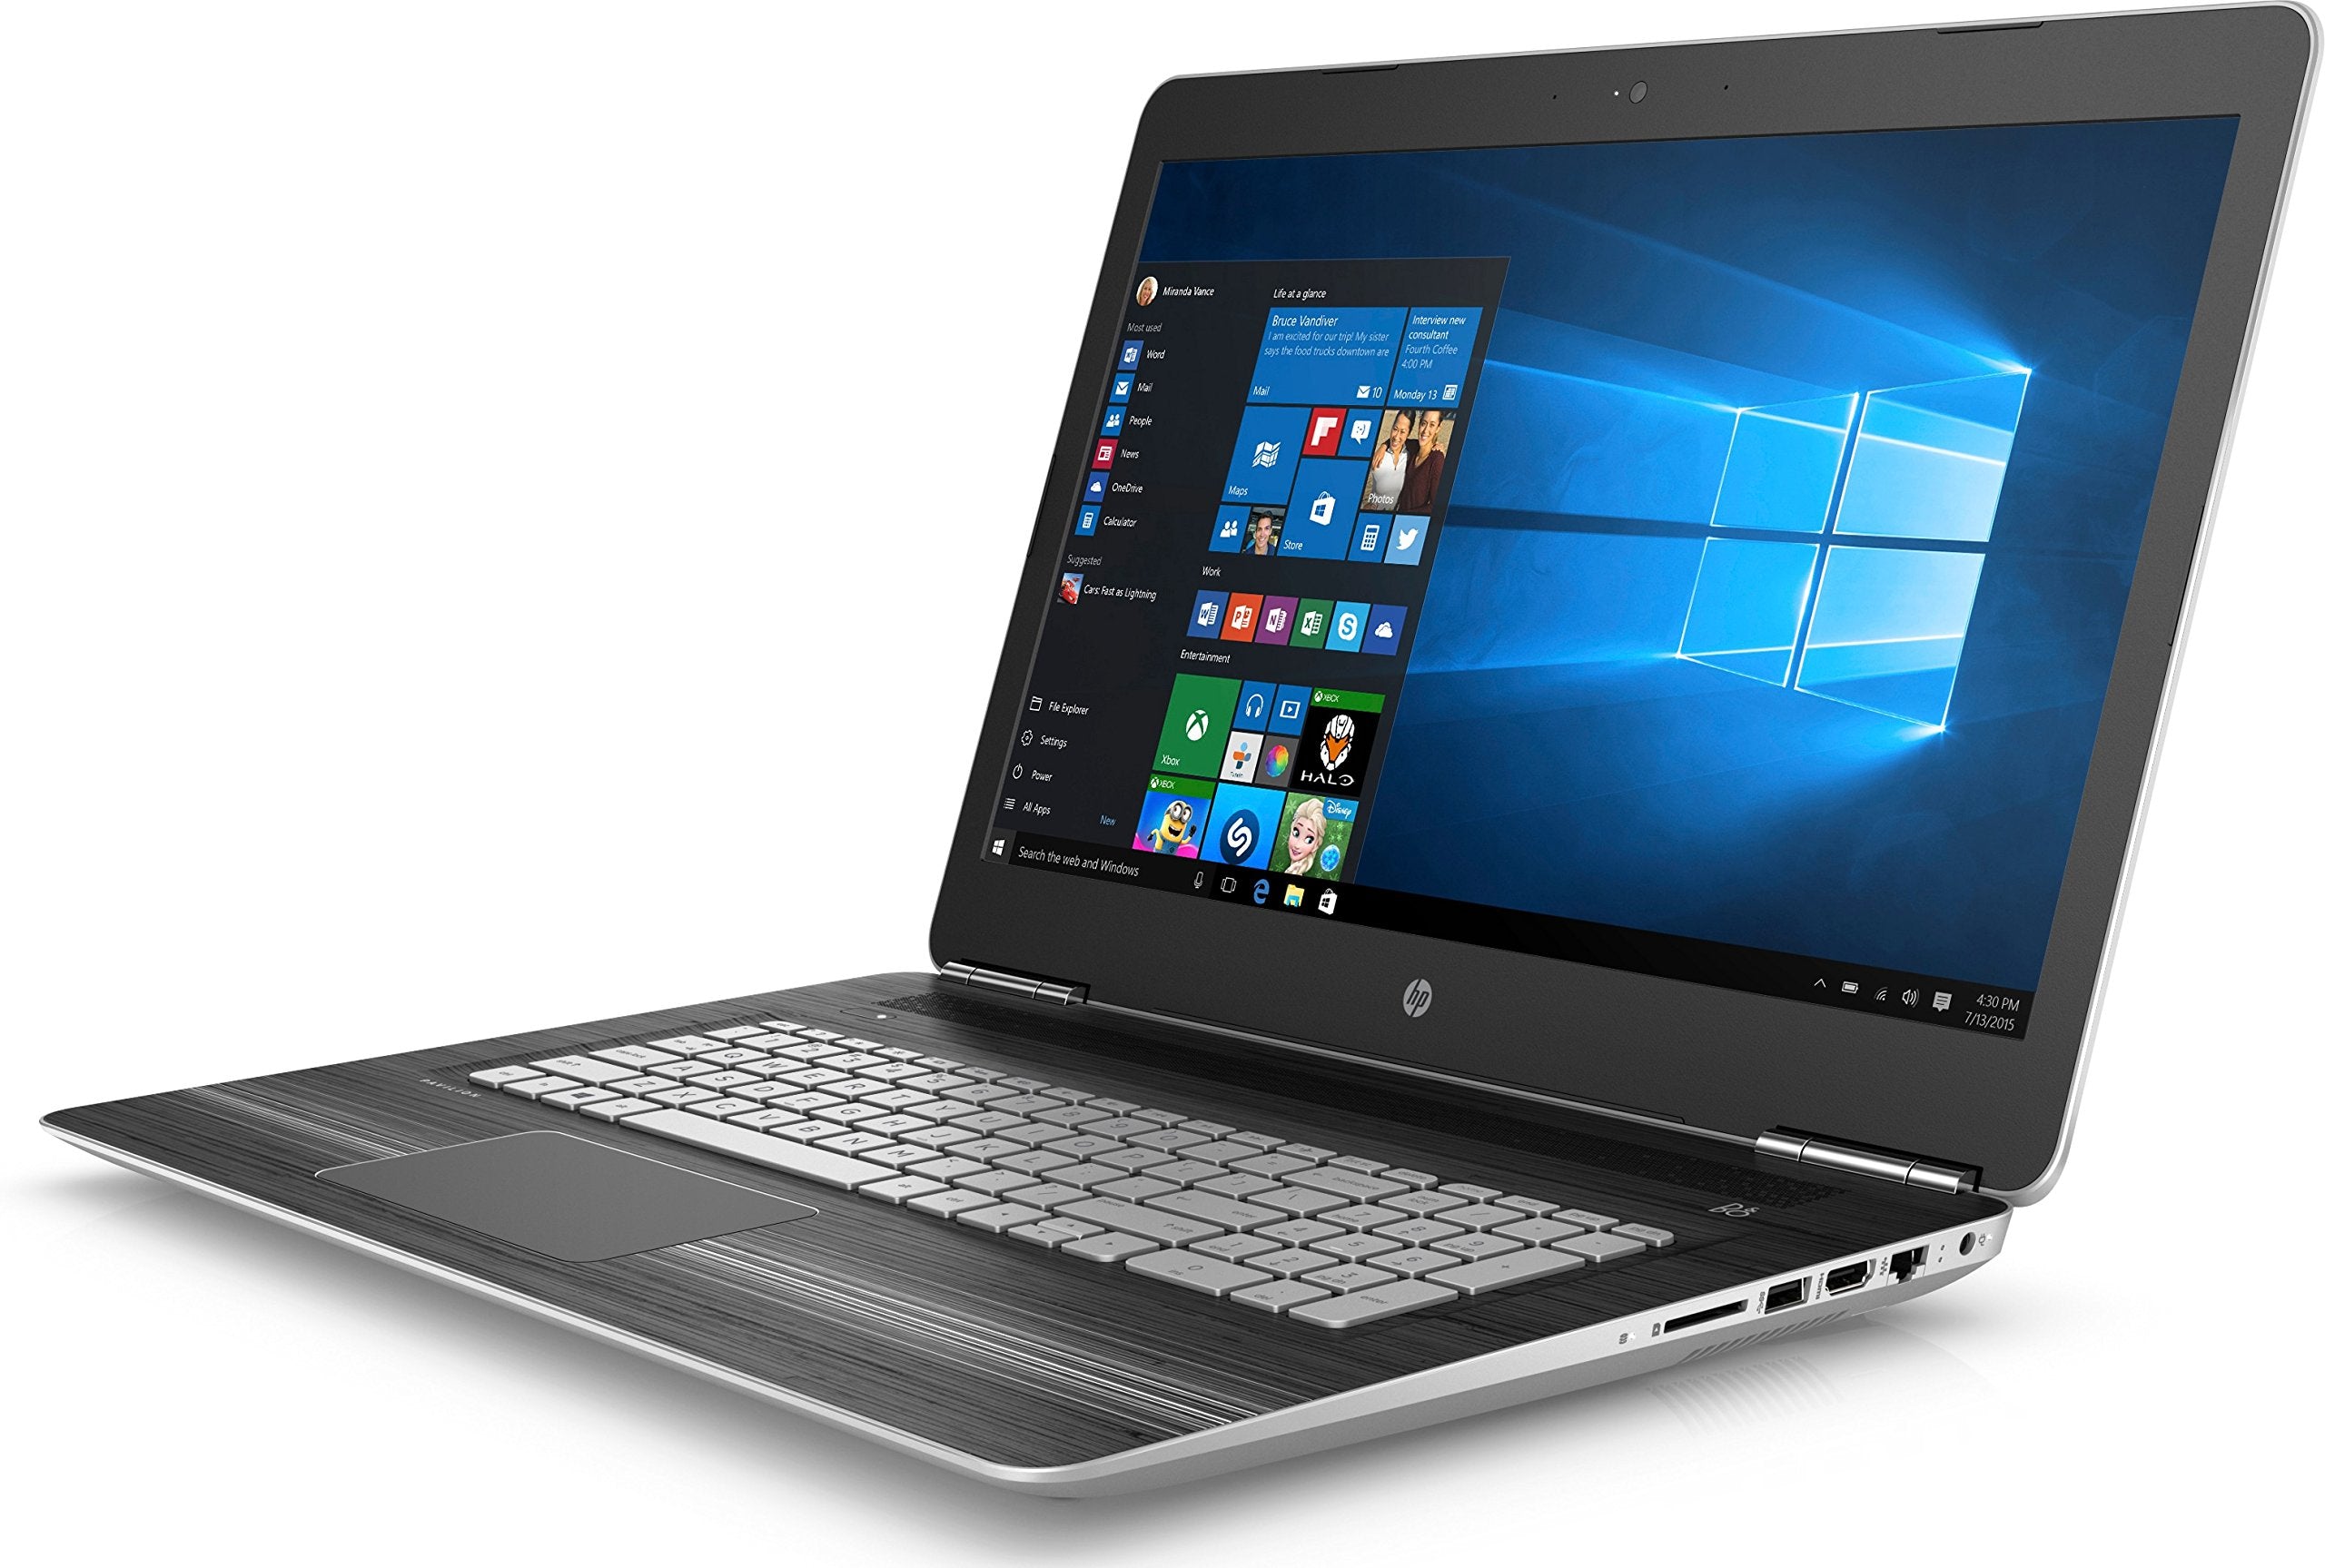 HP Pavilion 15-cw1007n 15.6" FHD Laptop, Ryzen 5 3500U (4 Cores, 3.7GHz), 16GB DDR4, 512GB SSD, AMD Radeon Vega 8 Graphics, Free upgrade to Windows 11 pro – UK Keyboard Layout - 6QC77EA